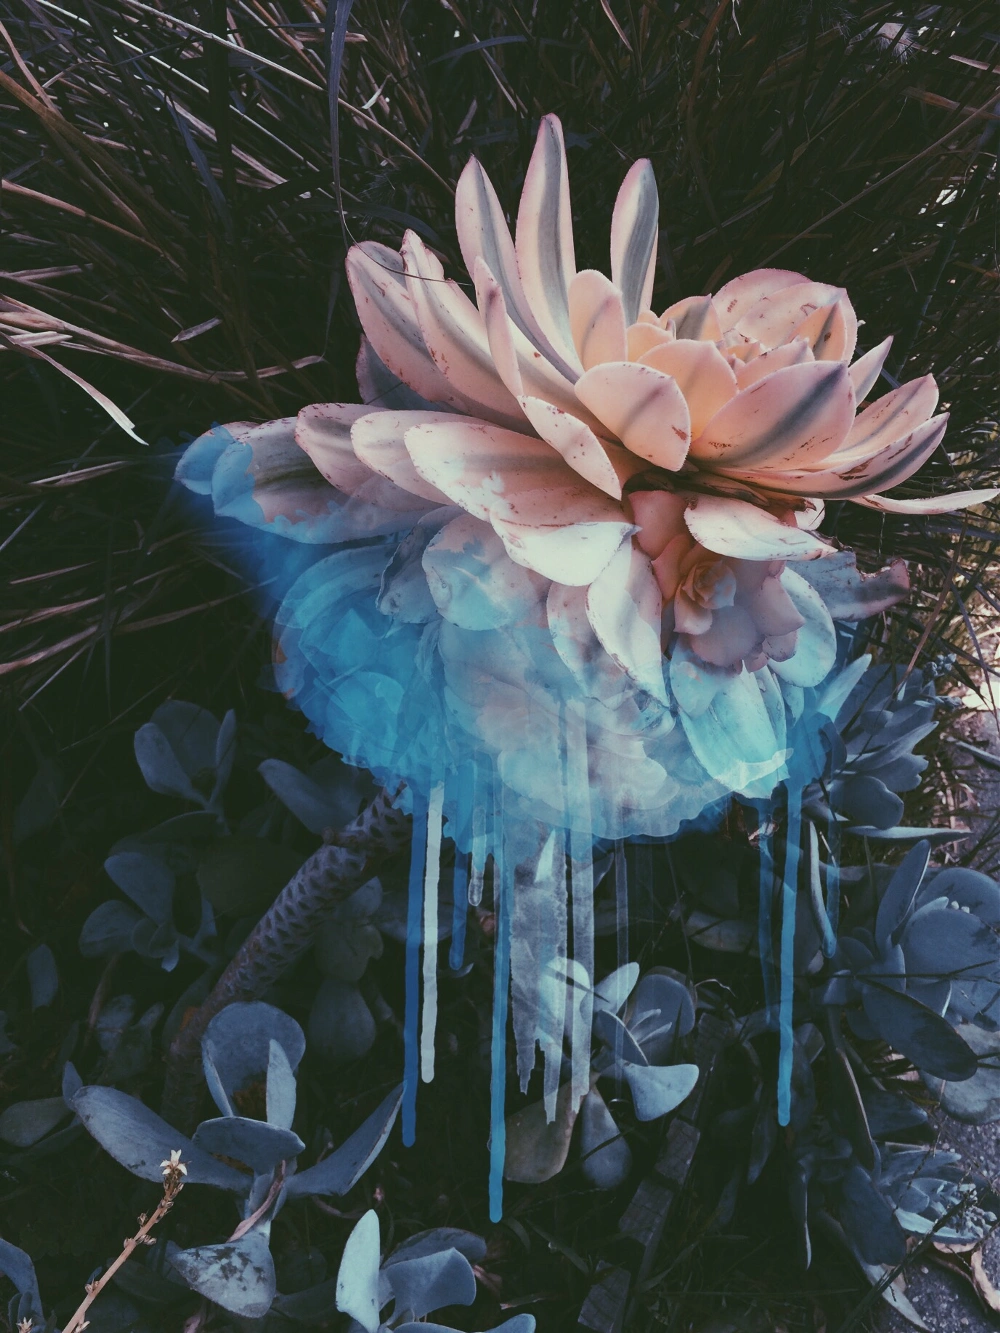 Magical flower 🌸 #clipart